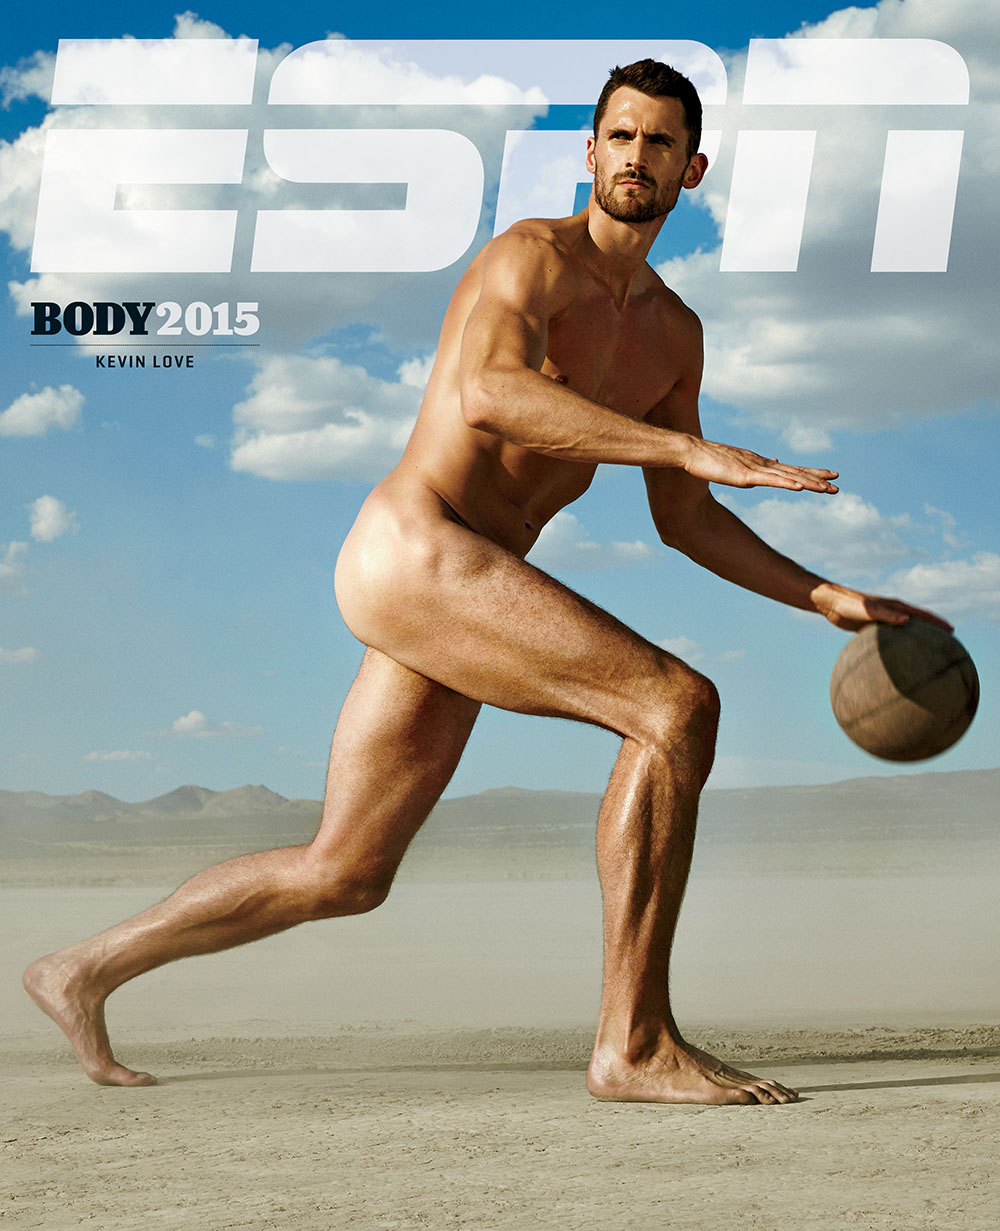 Photography News - Splendidi nudi sportivi di ESPN Kevin Love fotografati da Richard Phibbs